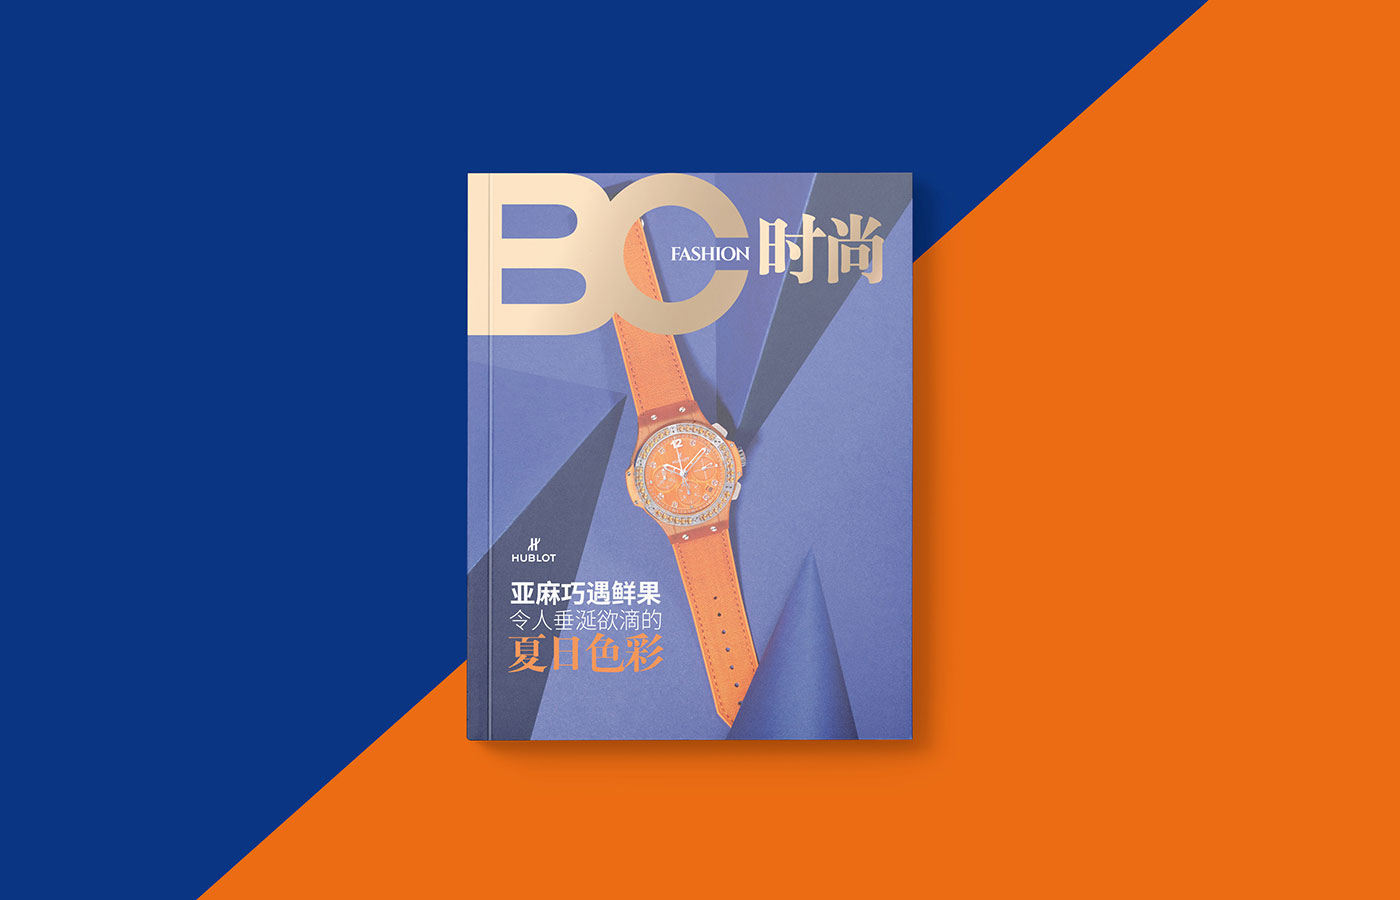 bc branding & magazine design by Z Creative Studio Branding & Graphic Design Melbourne